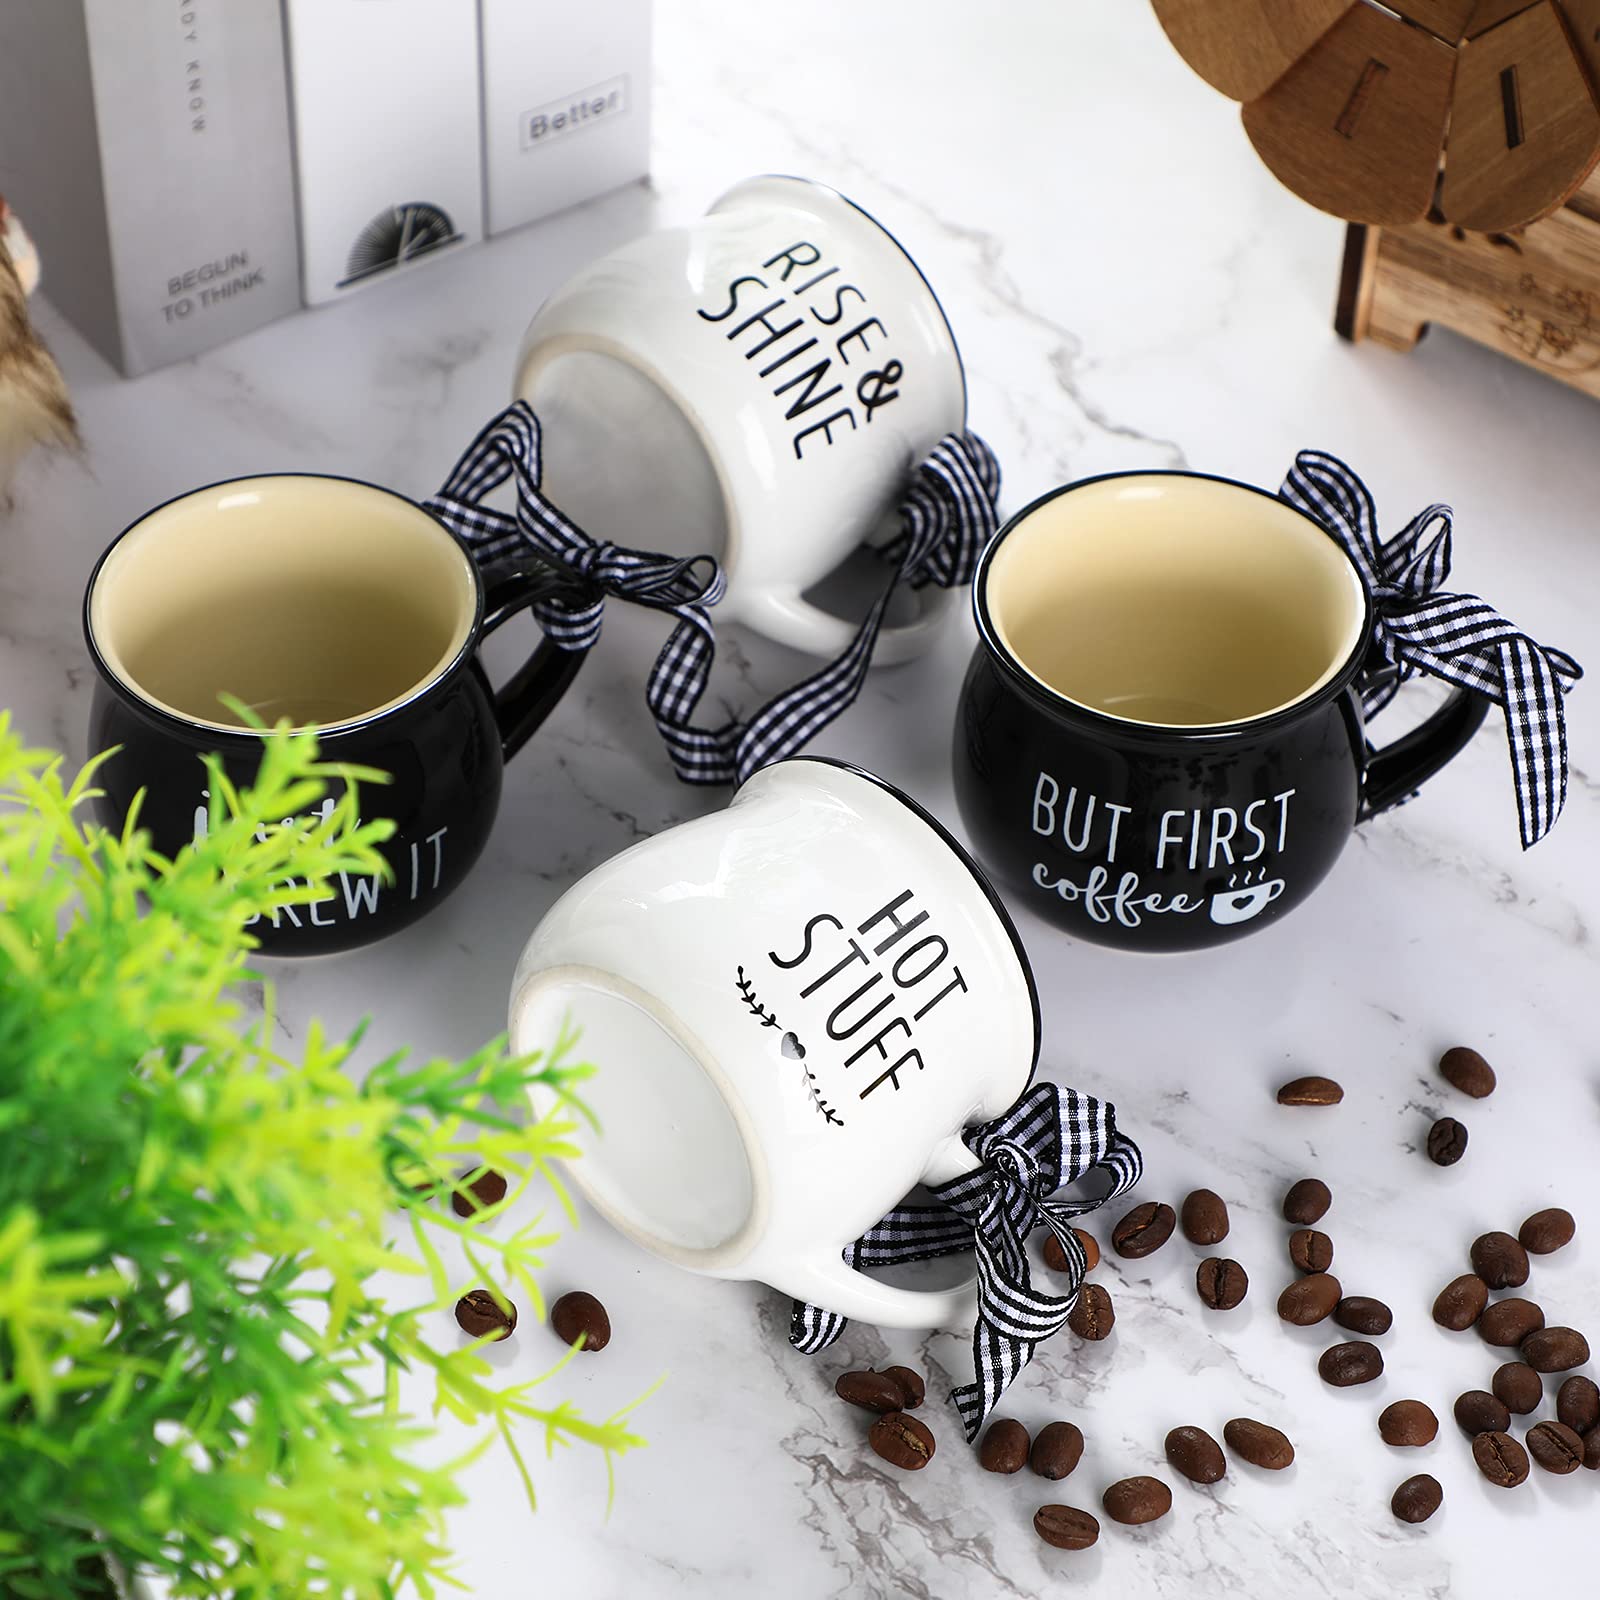 Patelai Espresso Cup, 5 Ounces Mini Coffee Mug Set, Christmas Gift for Women Mom Coffee Lover Farmhouse Coffee Bar Tiered Tray Decor Birthday Housewarming Gift (Classic Style)